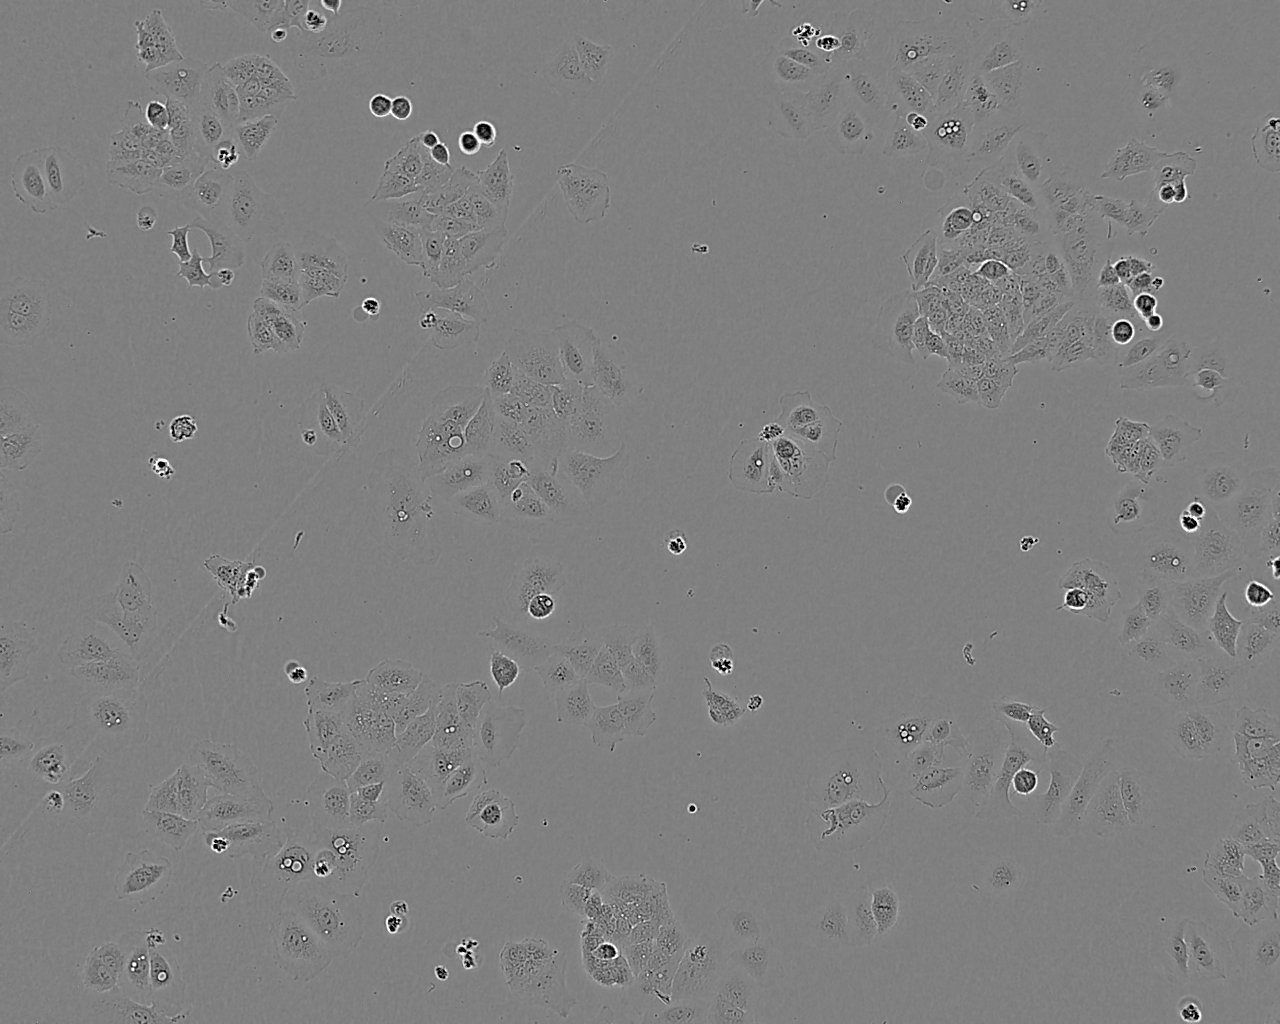 FL 62891 Cell:人肝细胞系